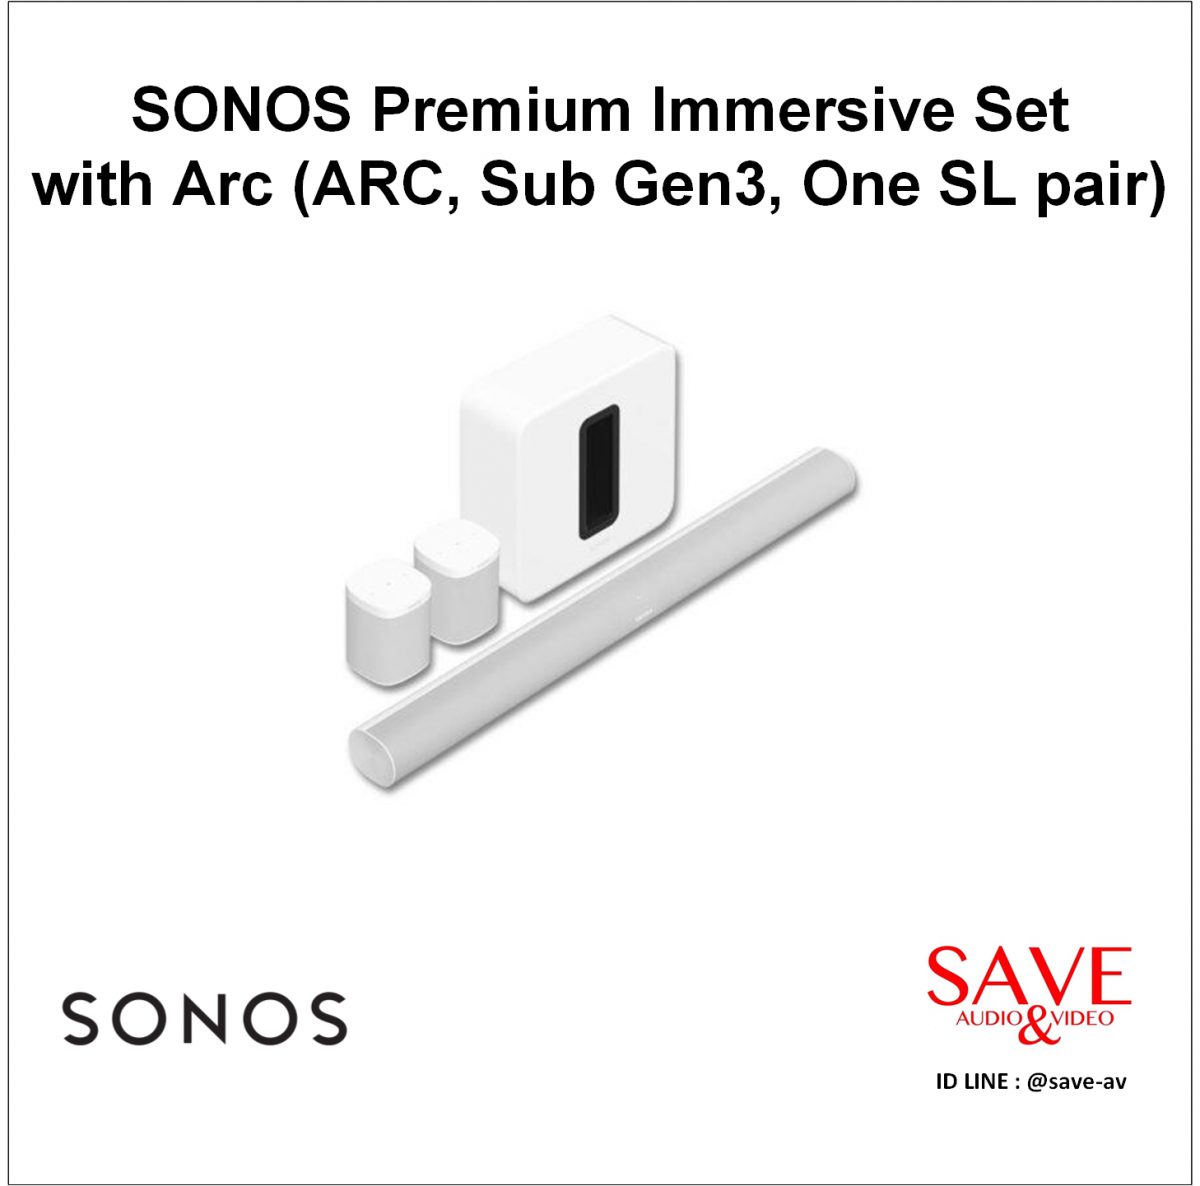 Sonos Thailand SONOS Premium Immersive Set with Arc (ARC, Sub Gen3, One SL pair)